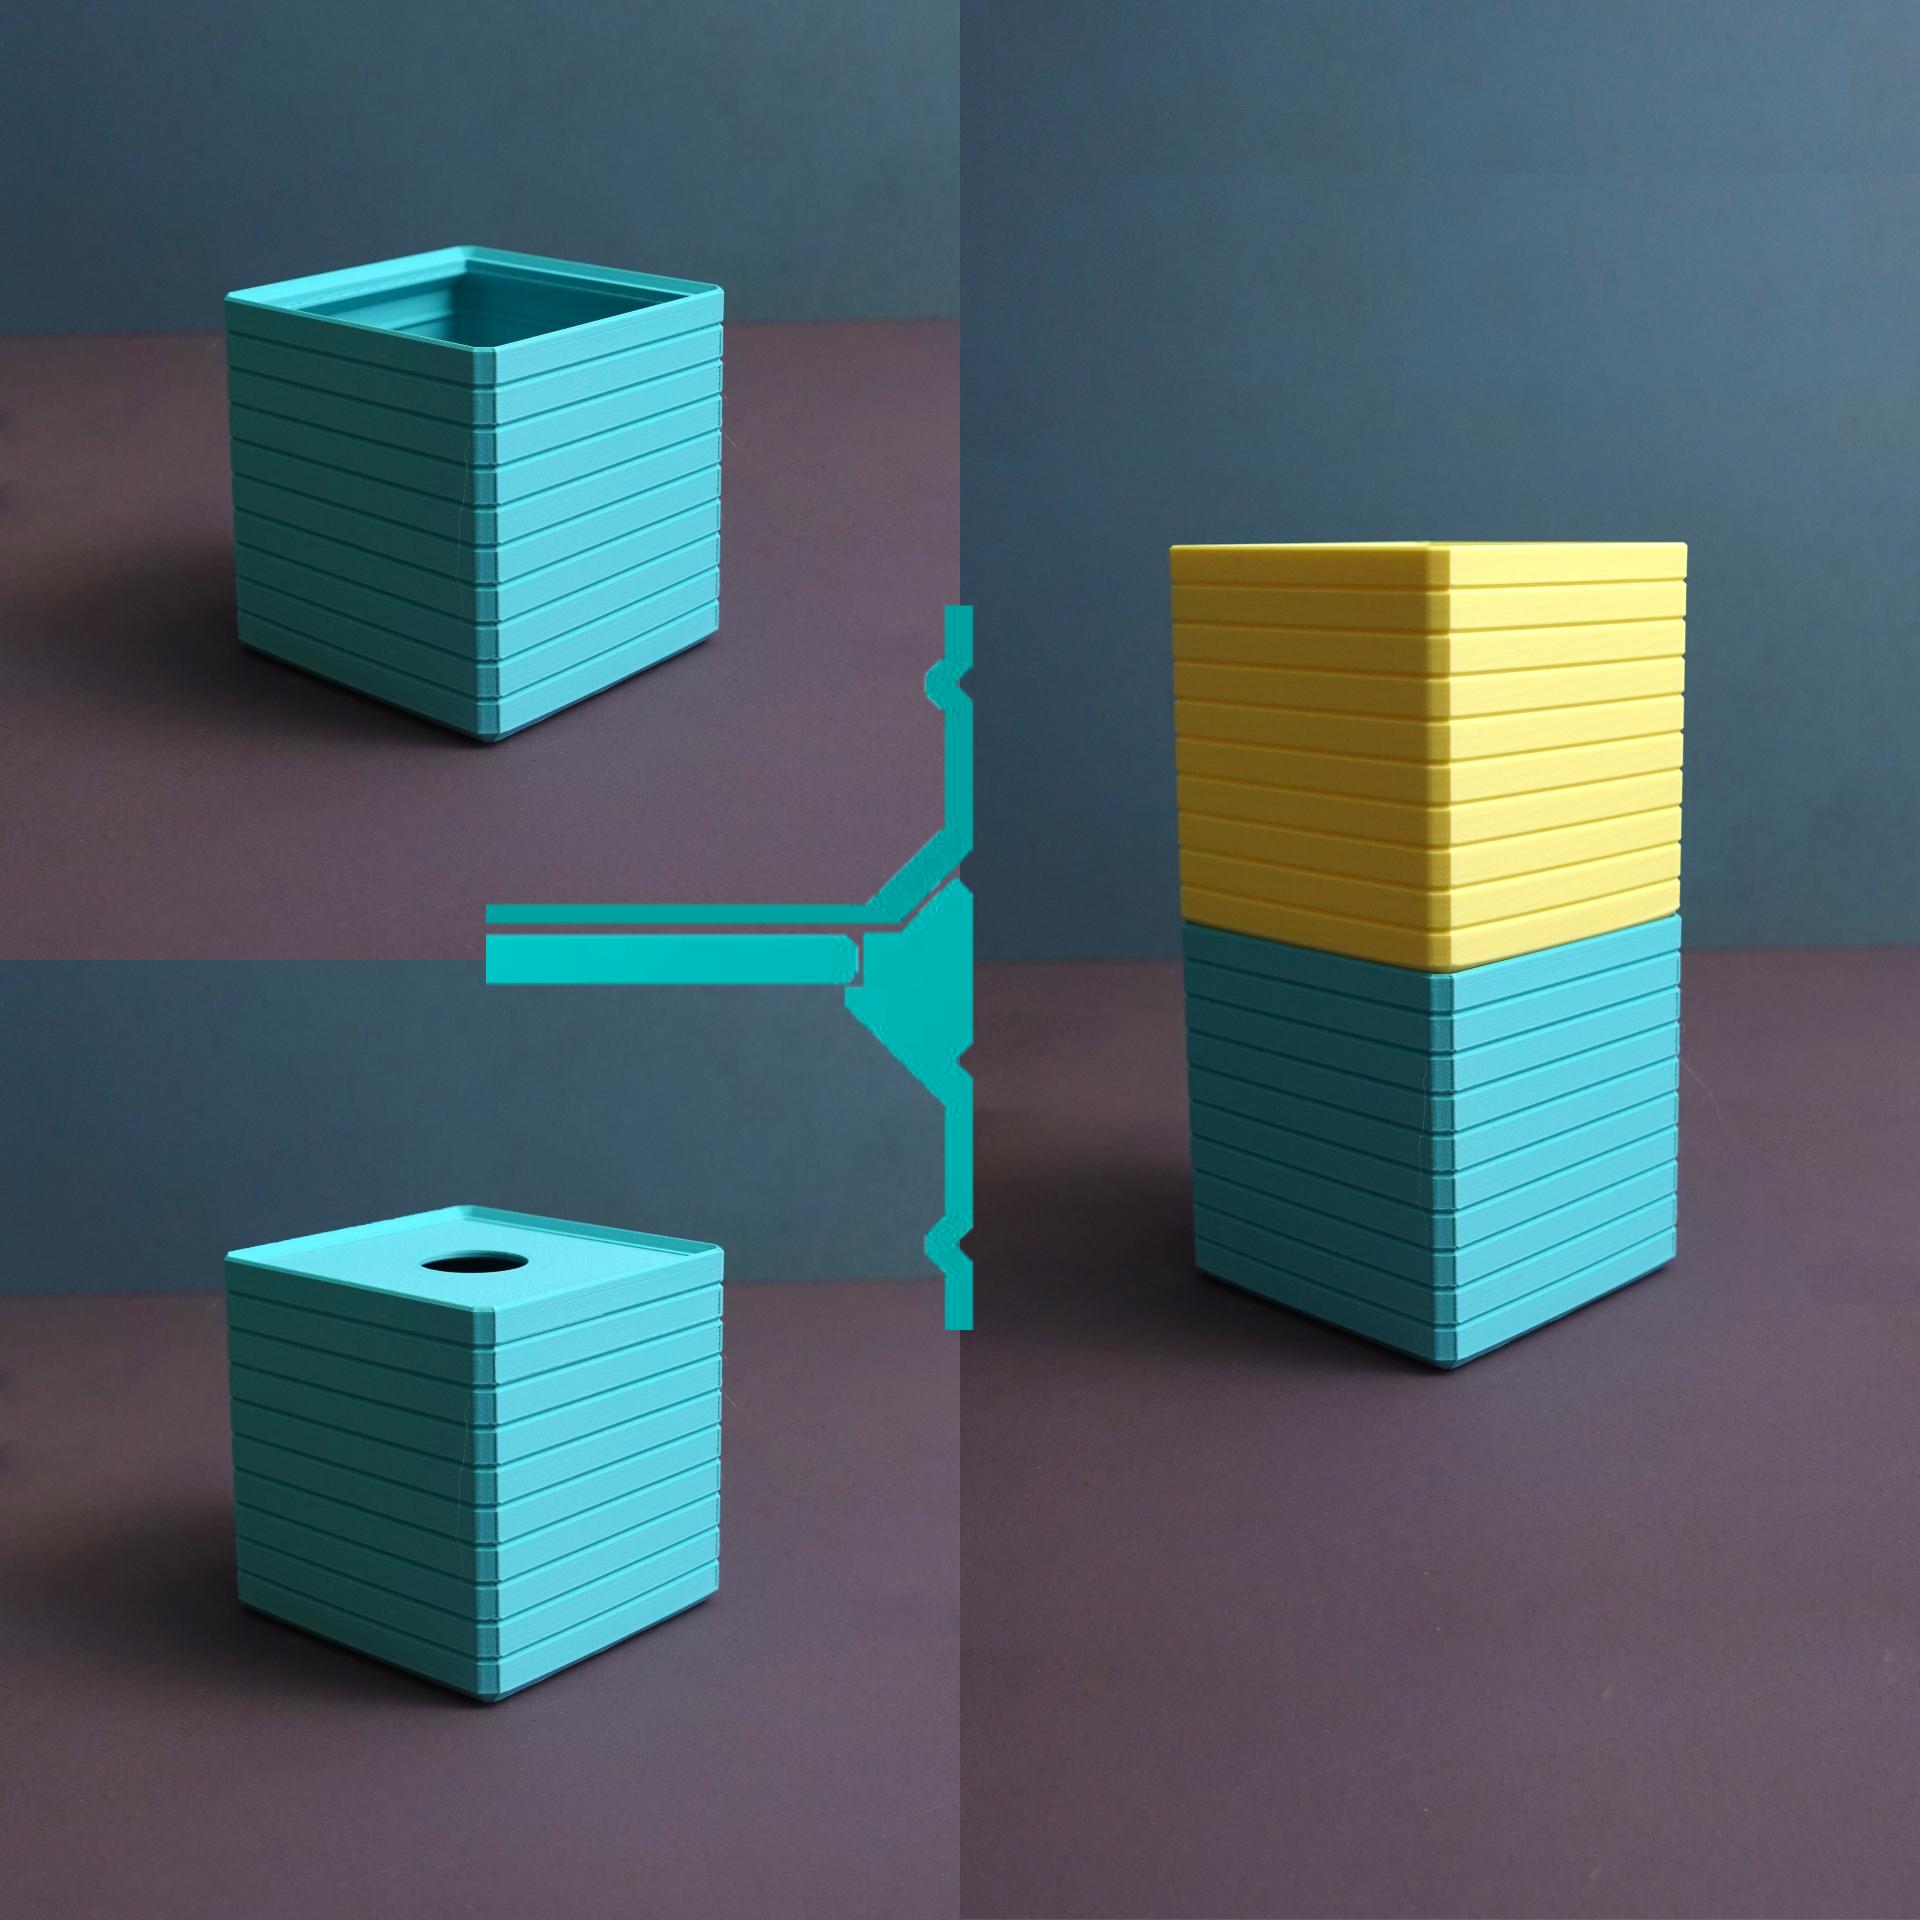 Modular, stackable boxes 3d model